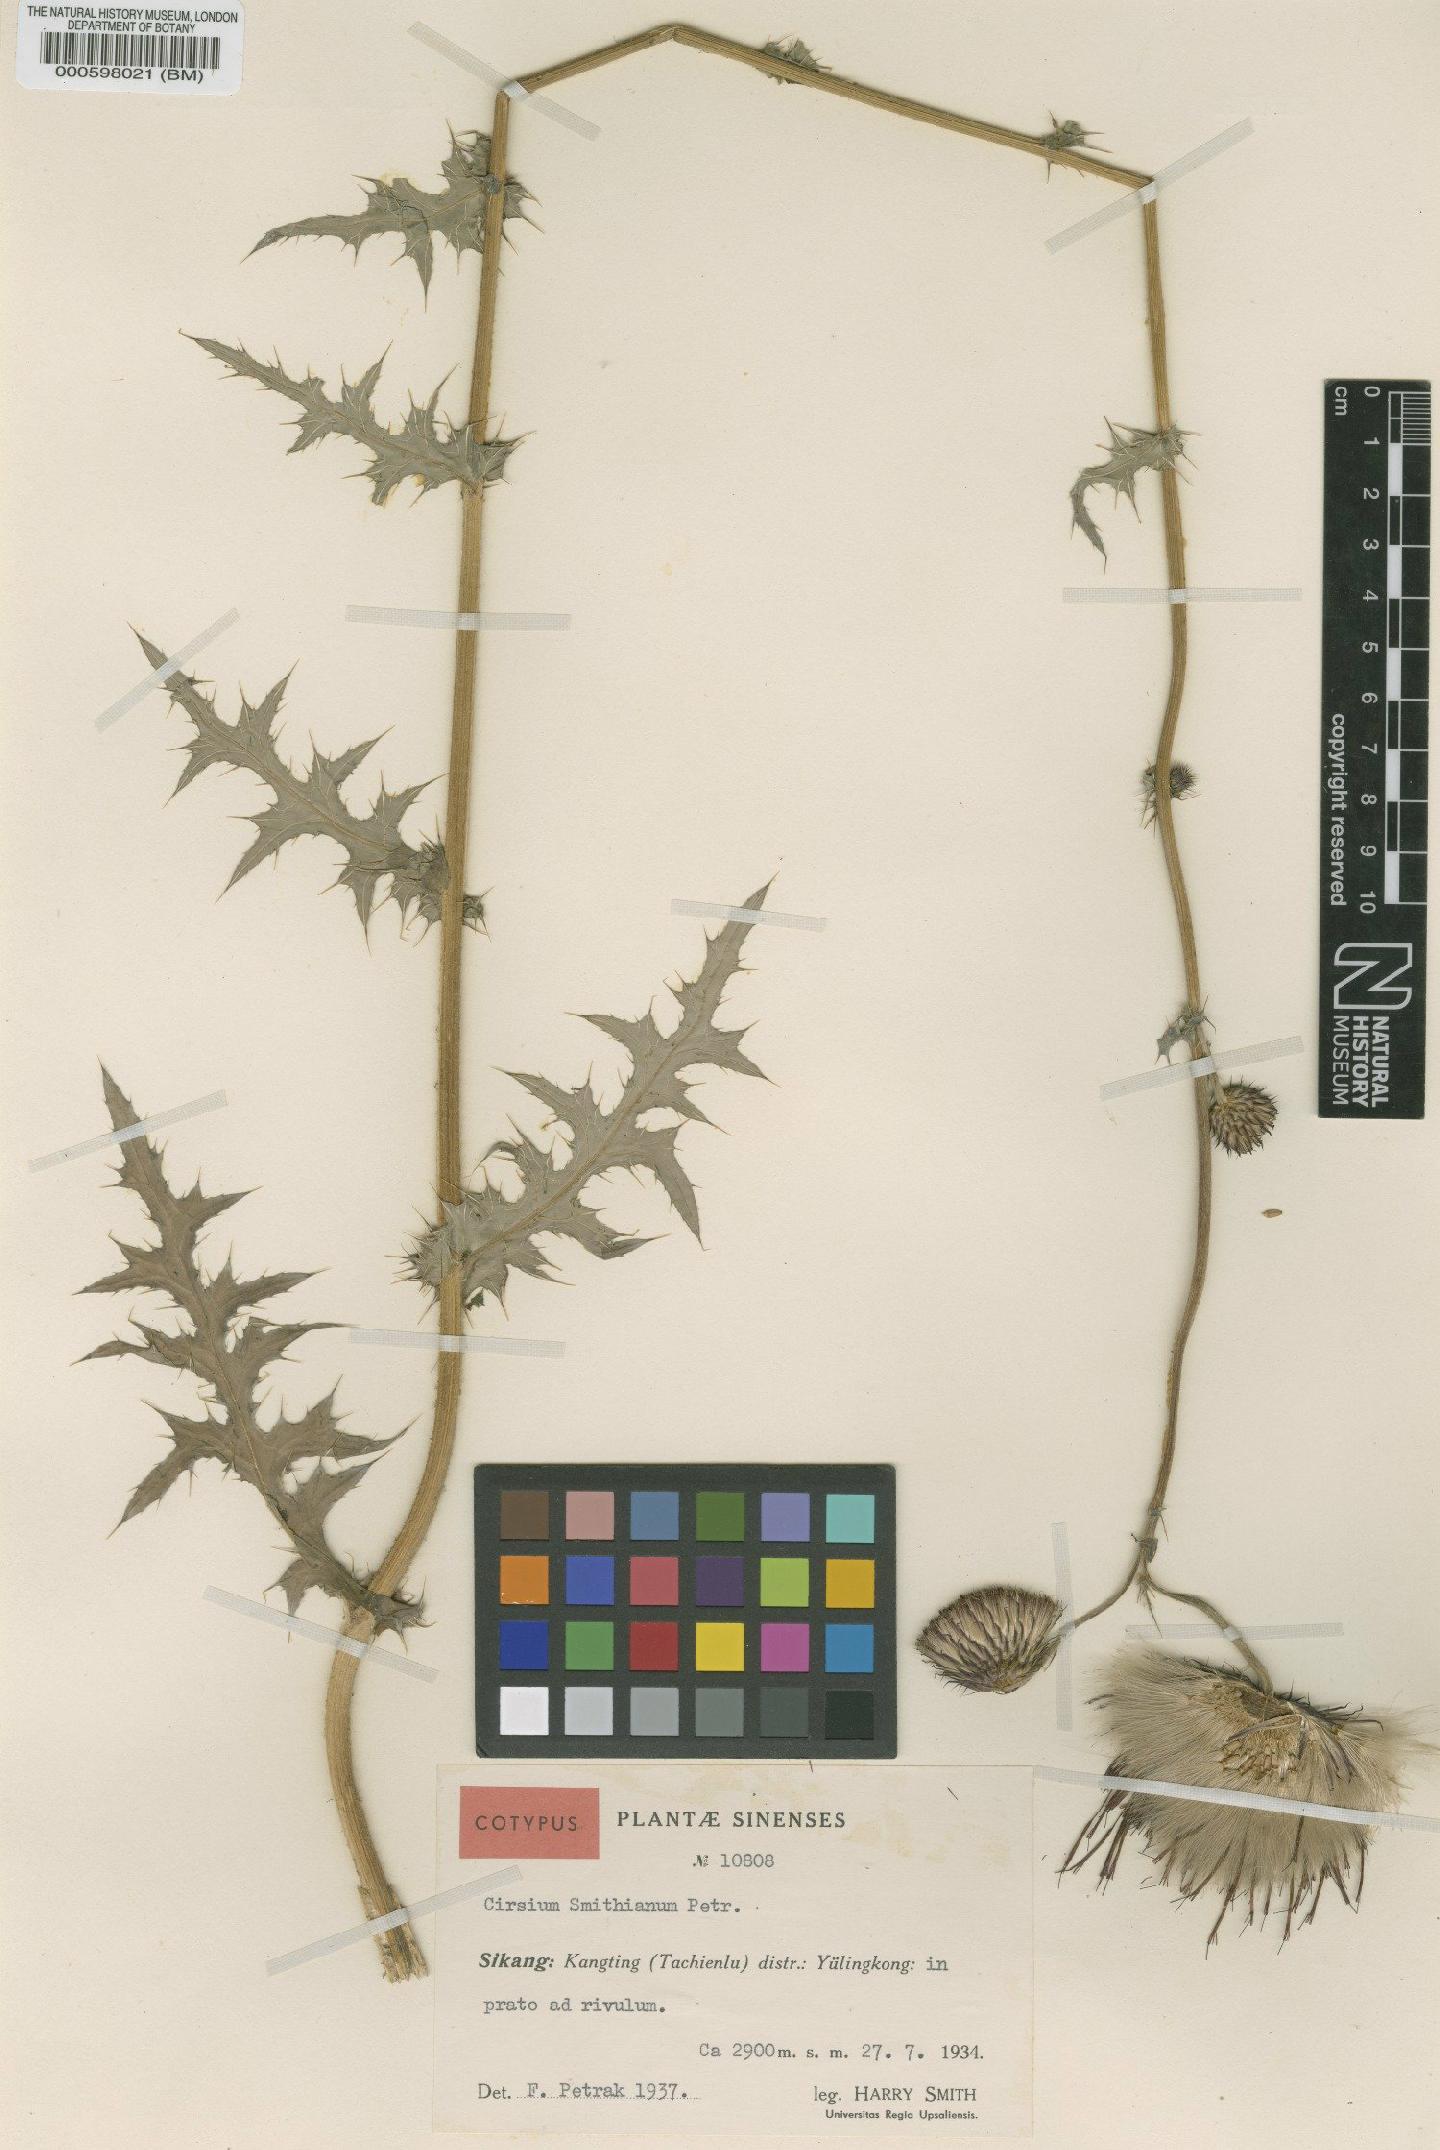 To NHMUK collection (Cirsium smithianum Petr; Isotype; NHMUK:ecatalogue:4982065)